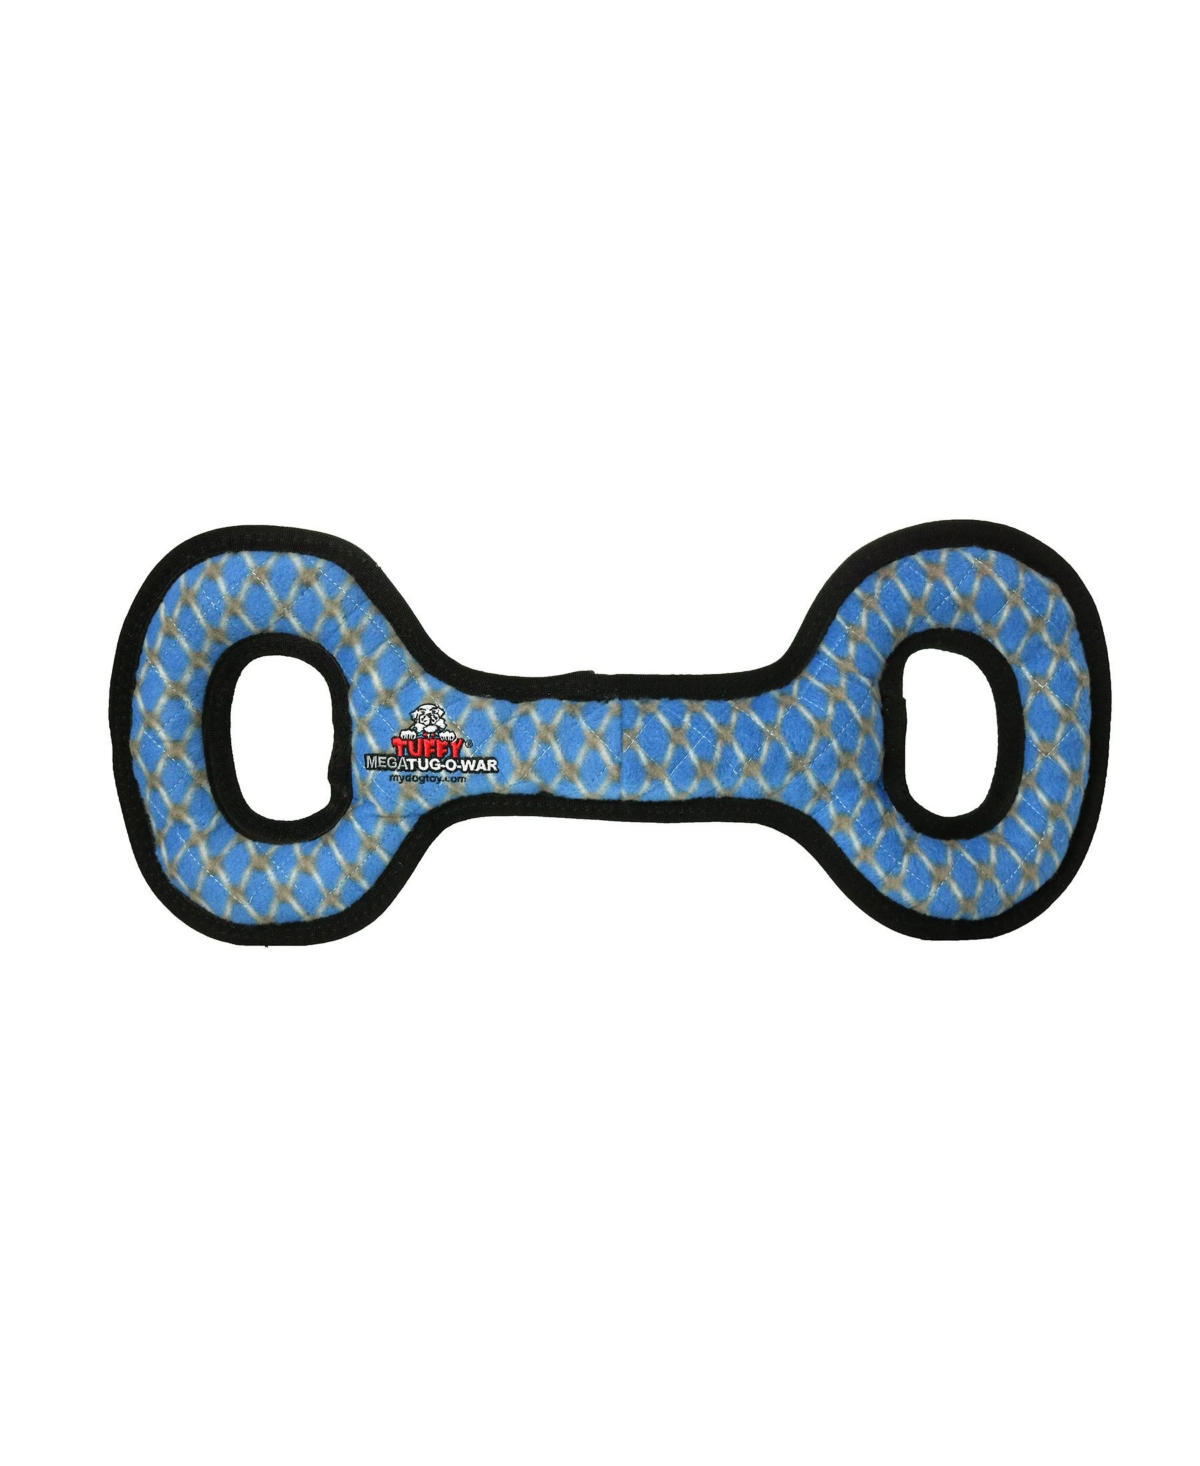 Mega Tug Oval Chain Link, Dog Toy - Medium Blue